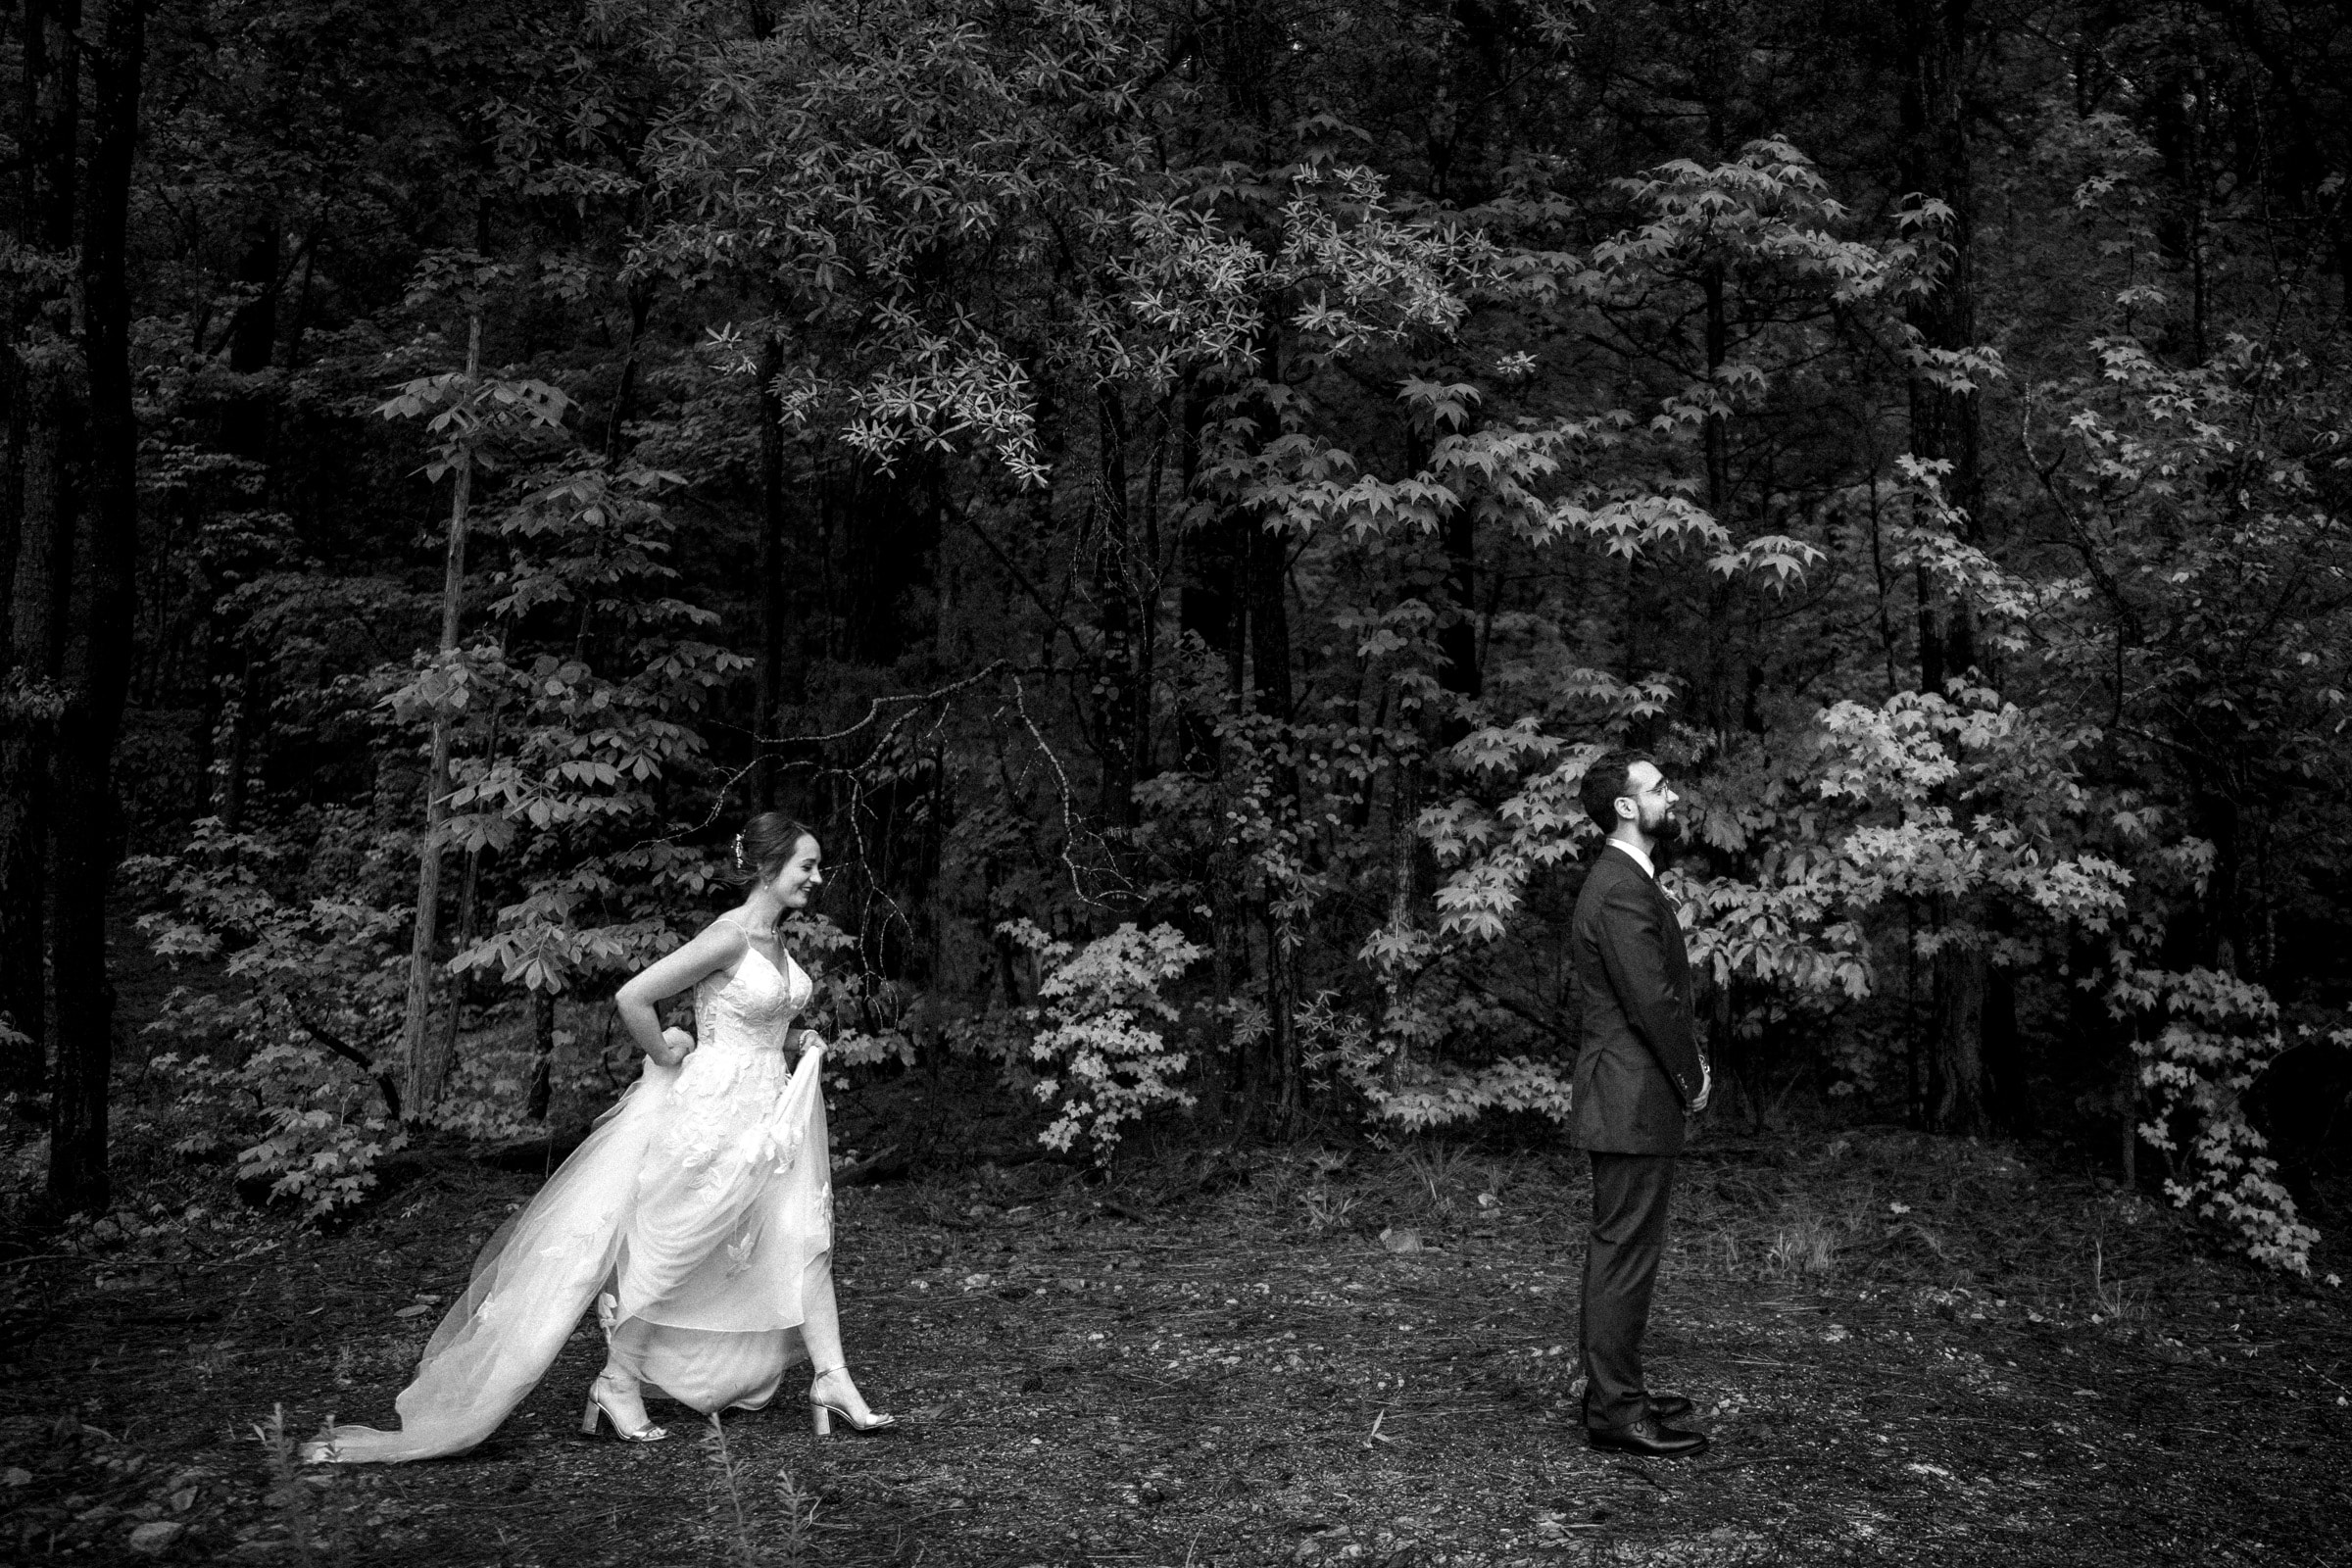 union grove farm wedding photography - kaylyn & jeremy